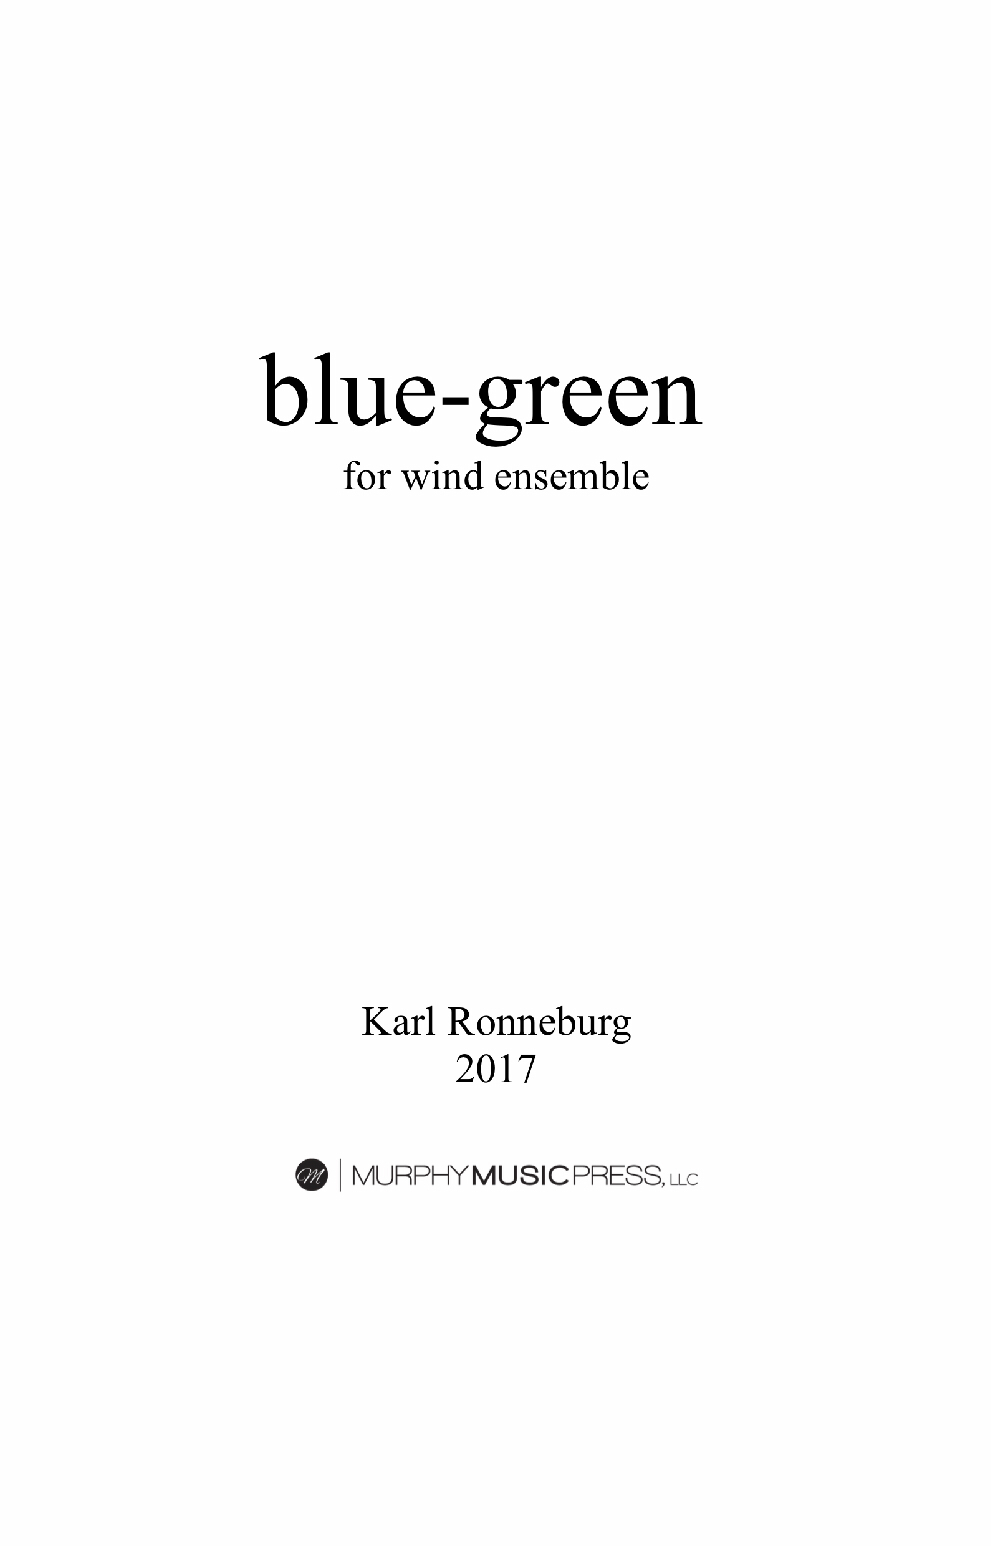 Blue-Green by Karl Ronneburg